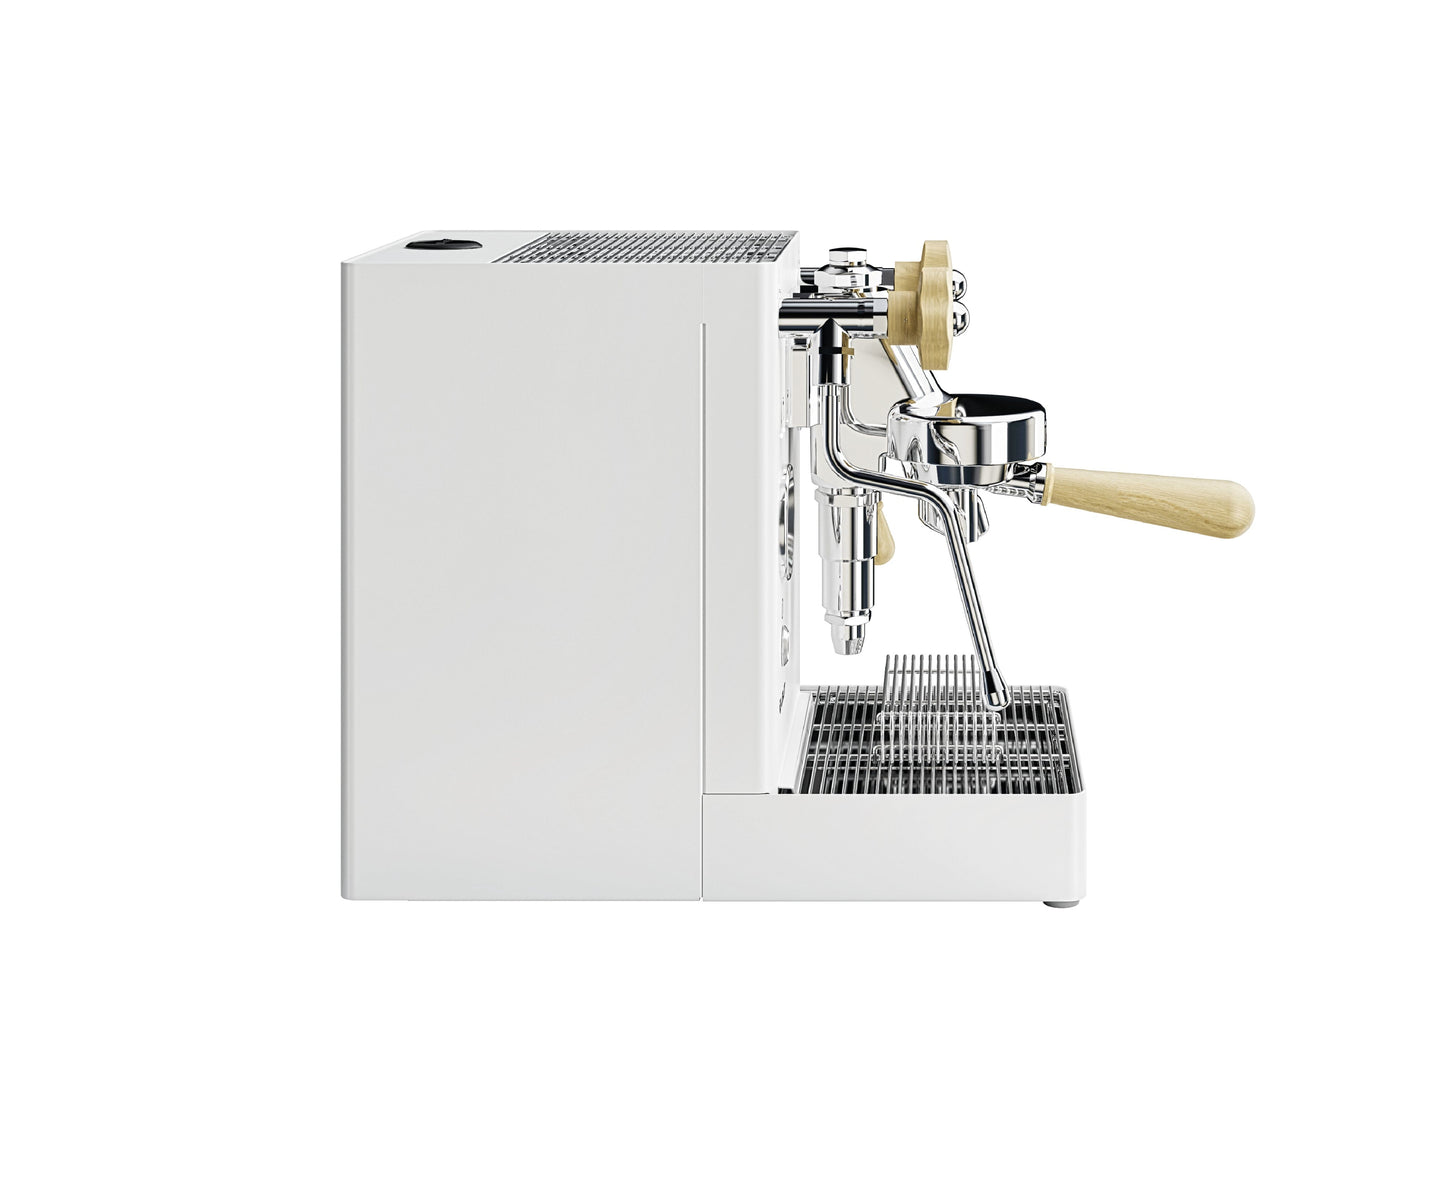 LeLit Mara X Espresso Machine